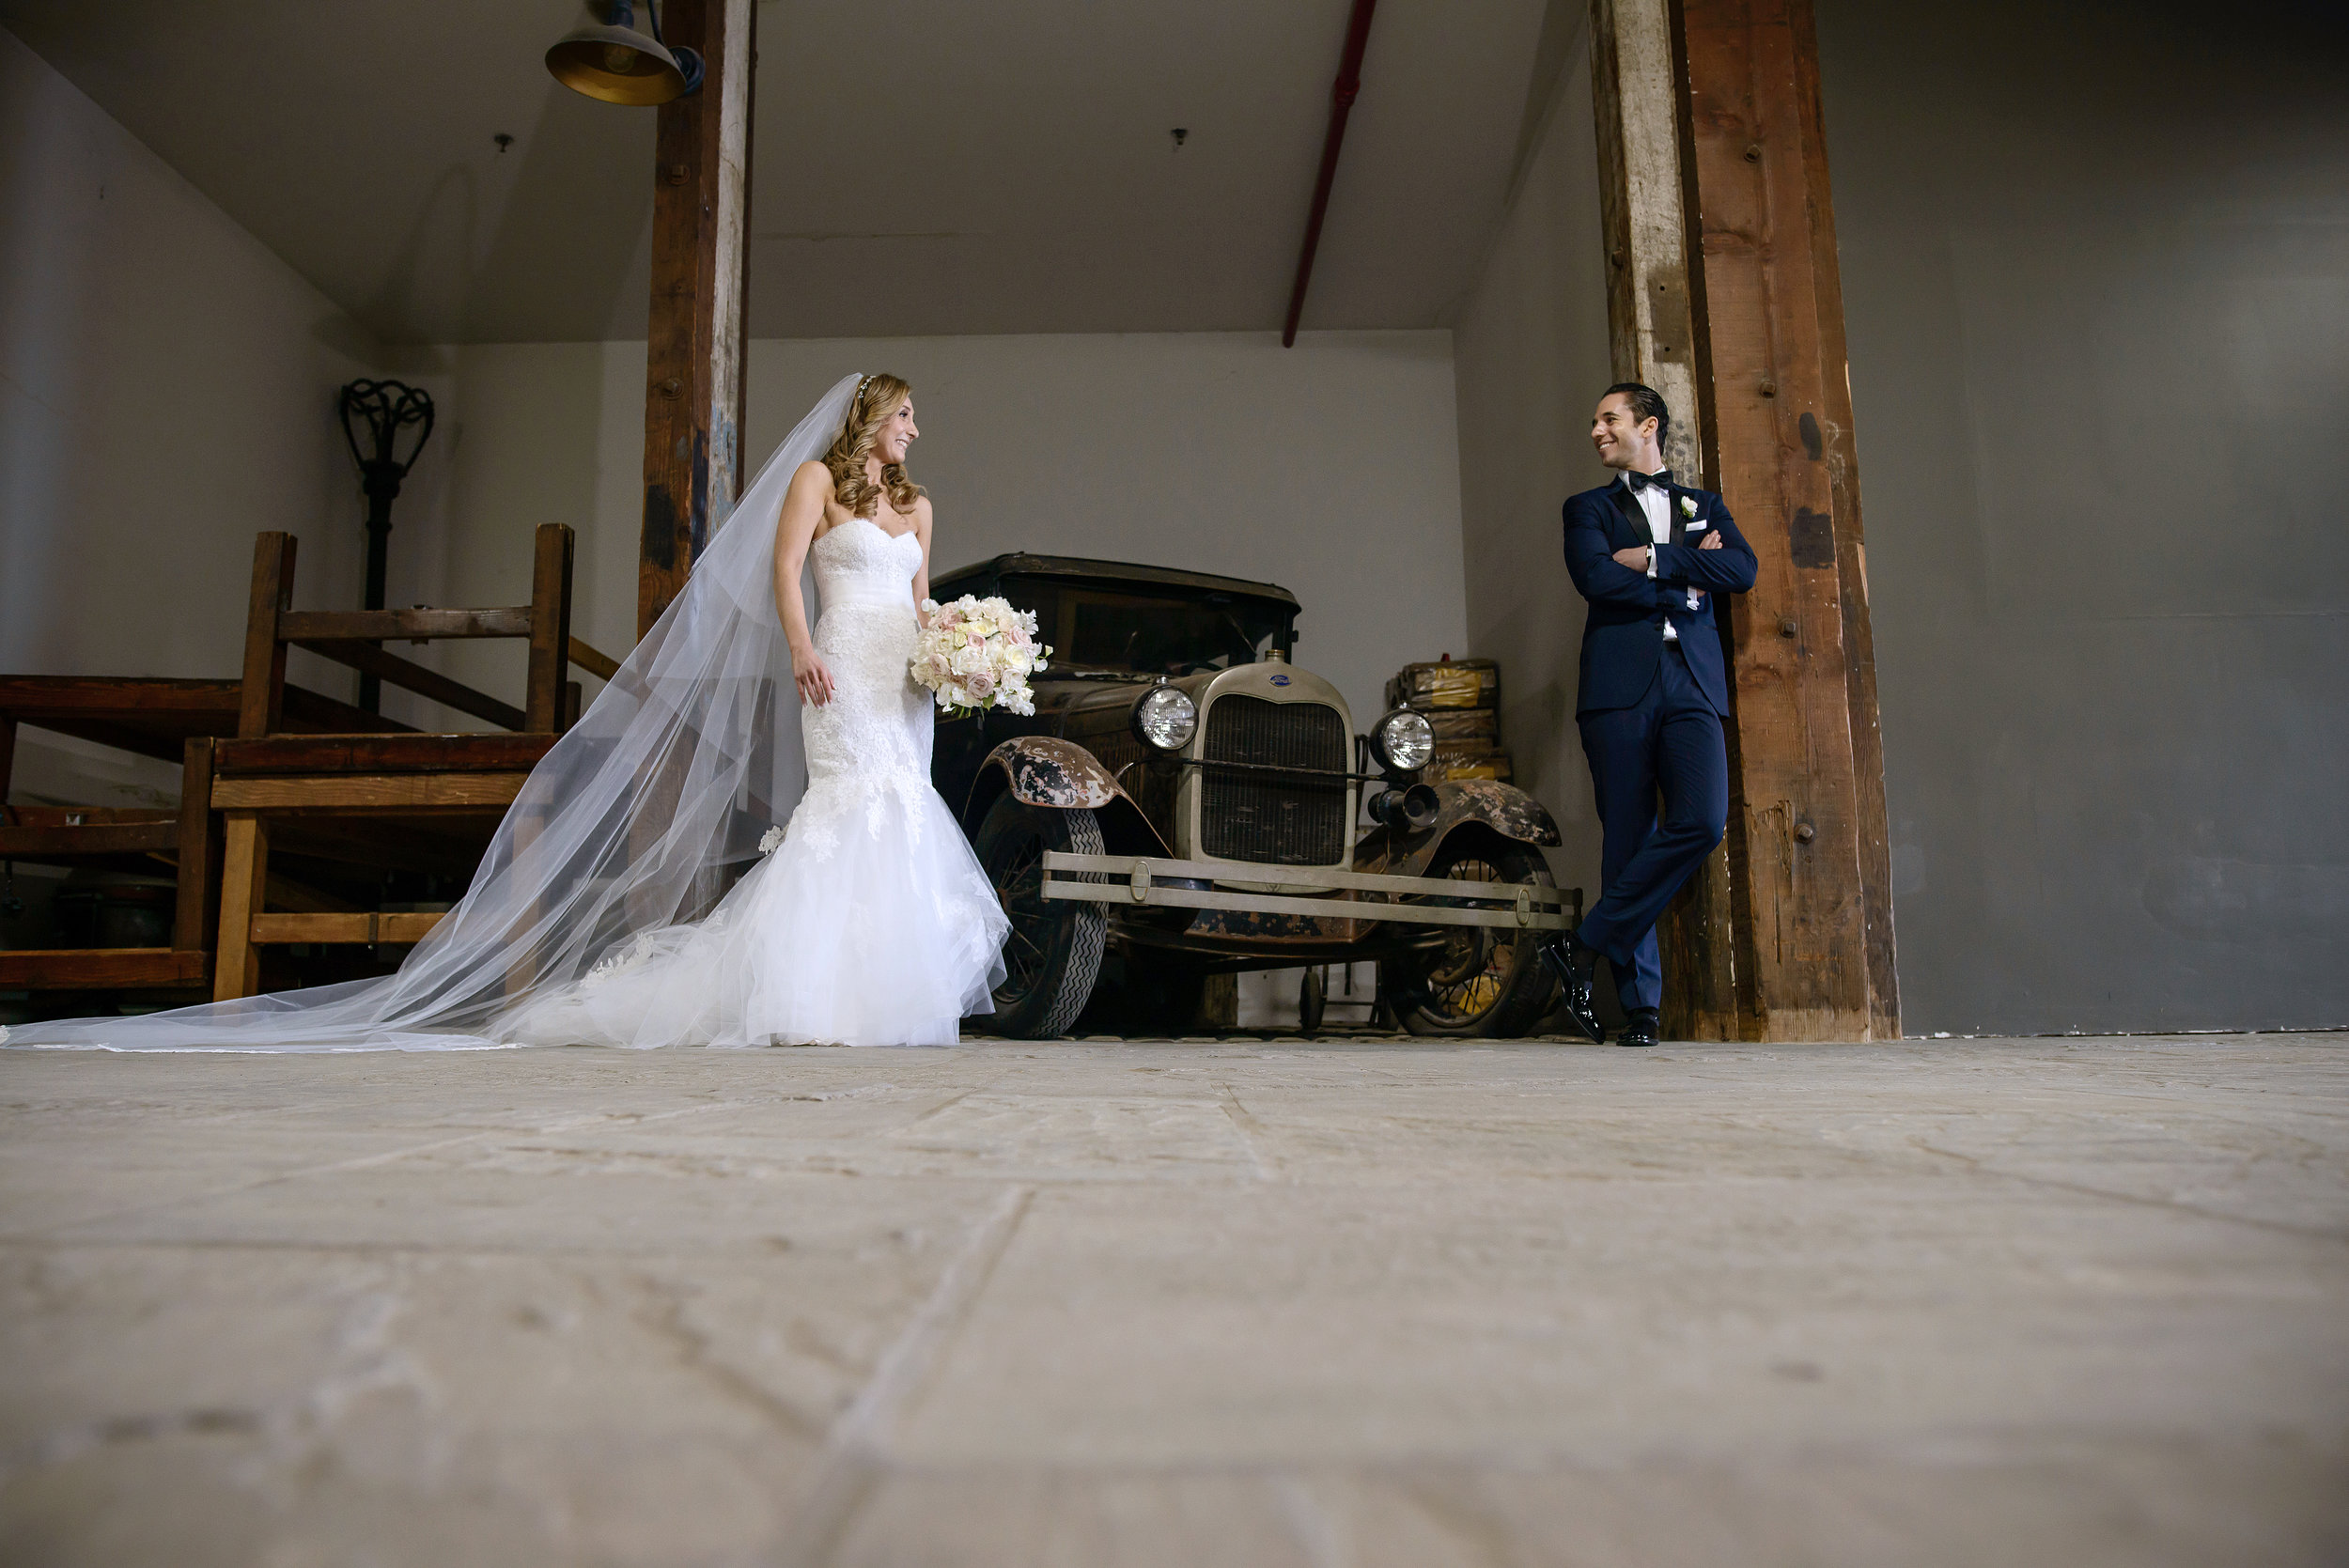  Wedding Photography &amp; Videography:&nbsp;  
  
 
 96 
  
    
  
 Normal 
 0 
 
 
 
 
 false 
 false 
 false 
 
 EN-US 
 X-NONE 
 X-NONE 
 
  
  
  
  
  
  
  
  
  
 
 
  
  
  
  
  
  
  
  
  
  
  
  
    
  
 
 
 
 
 
 
 
 
 
 
 
 
 
 
 
 